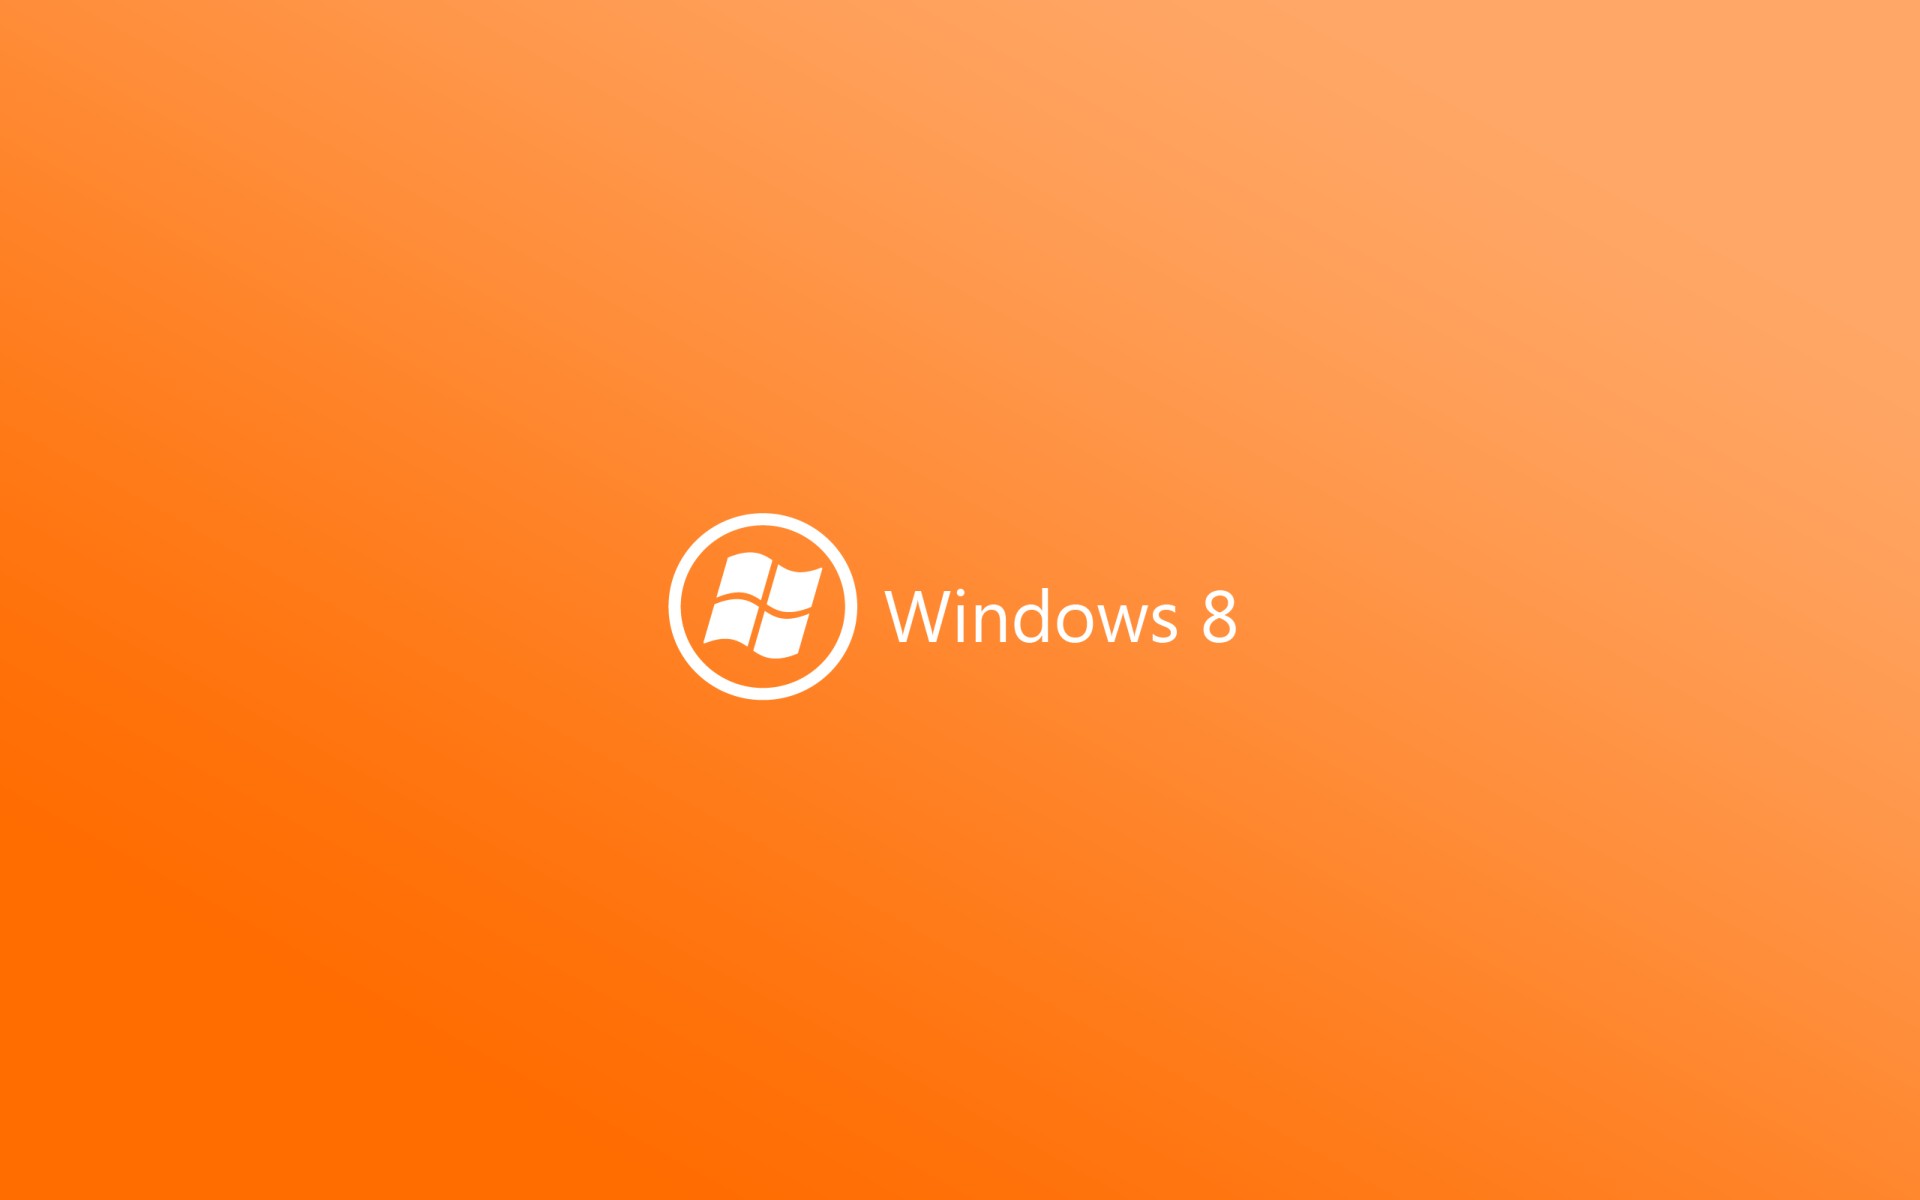 Windows 8 Logo Wallpapers |Hd Wallpapers 1080p